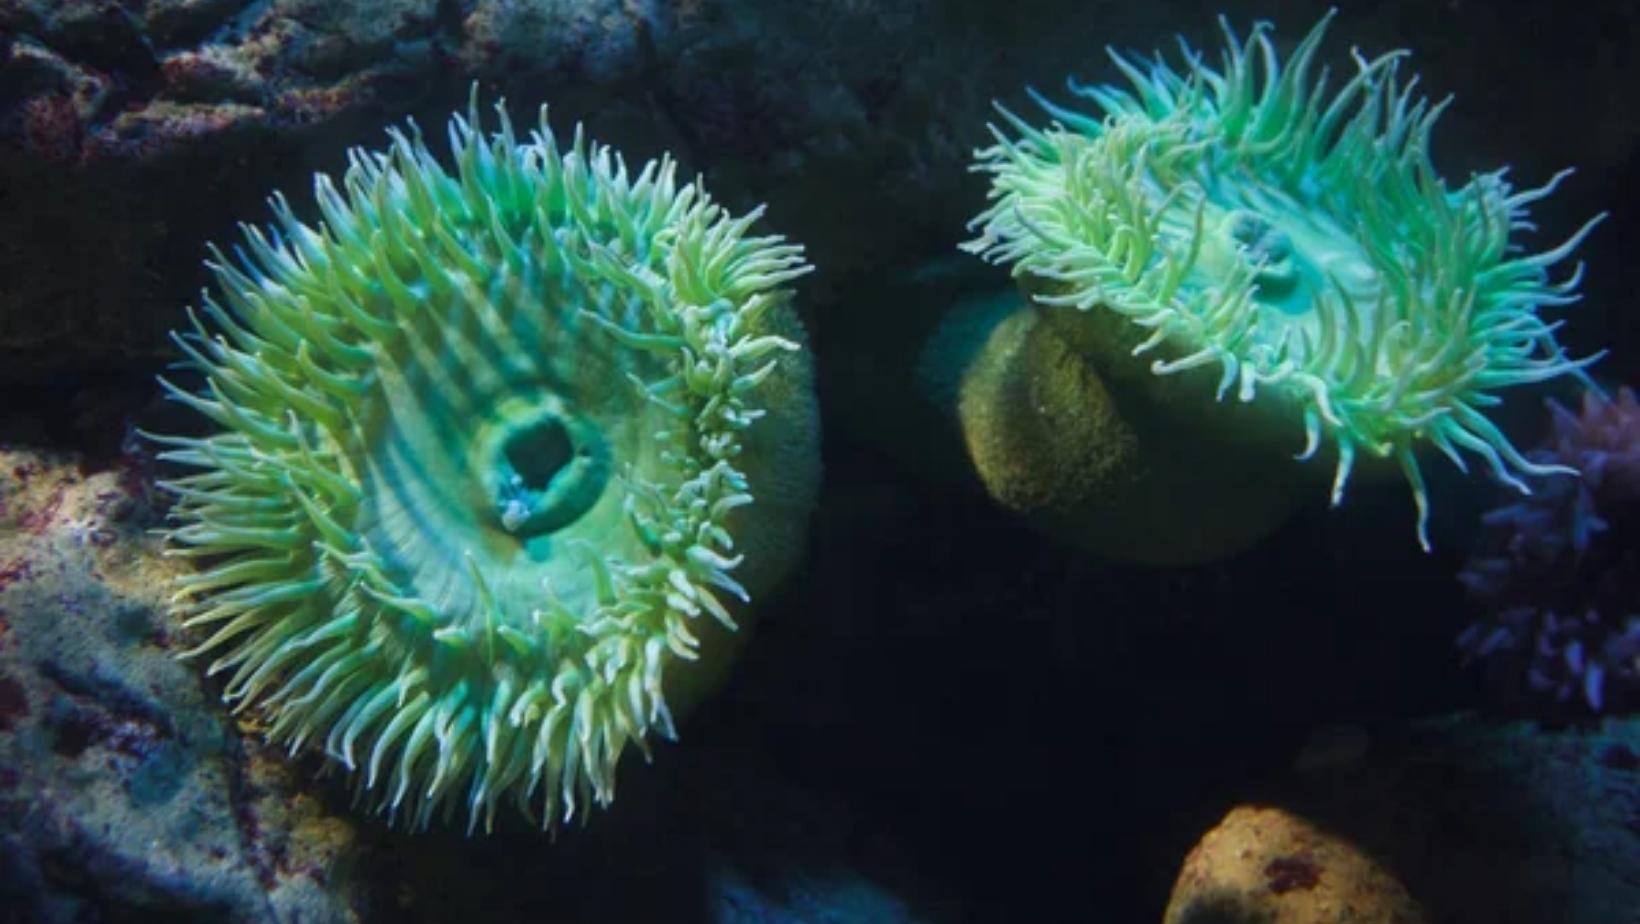 Lovely underwater plants